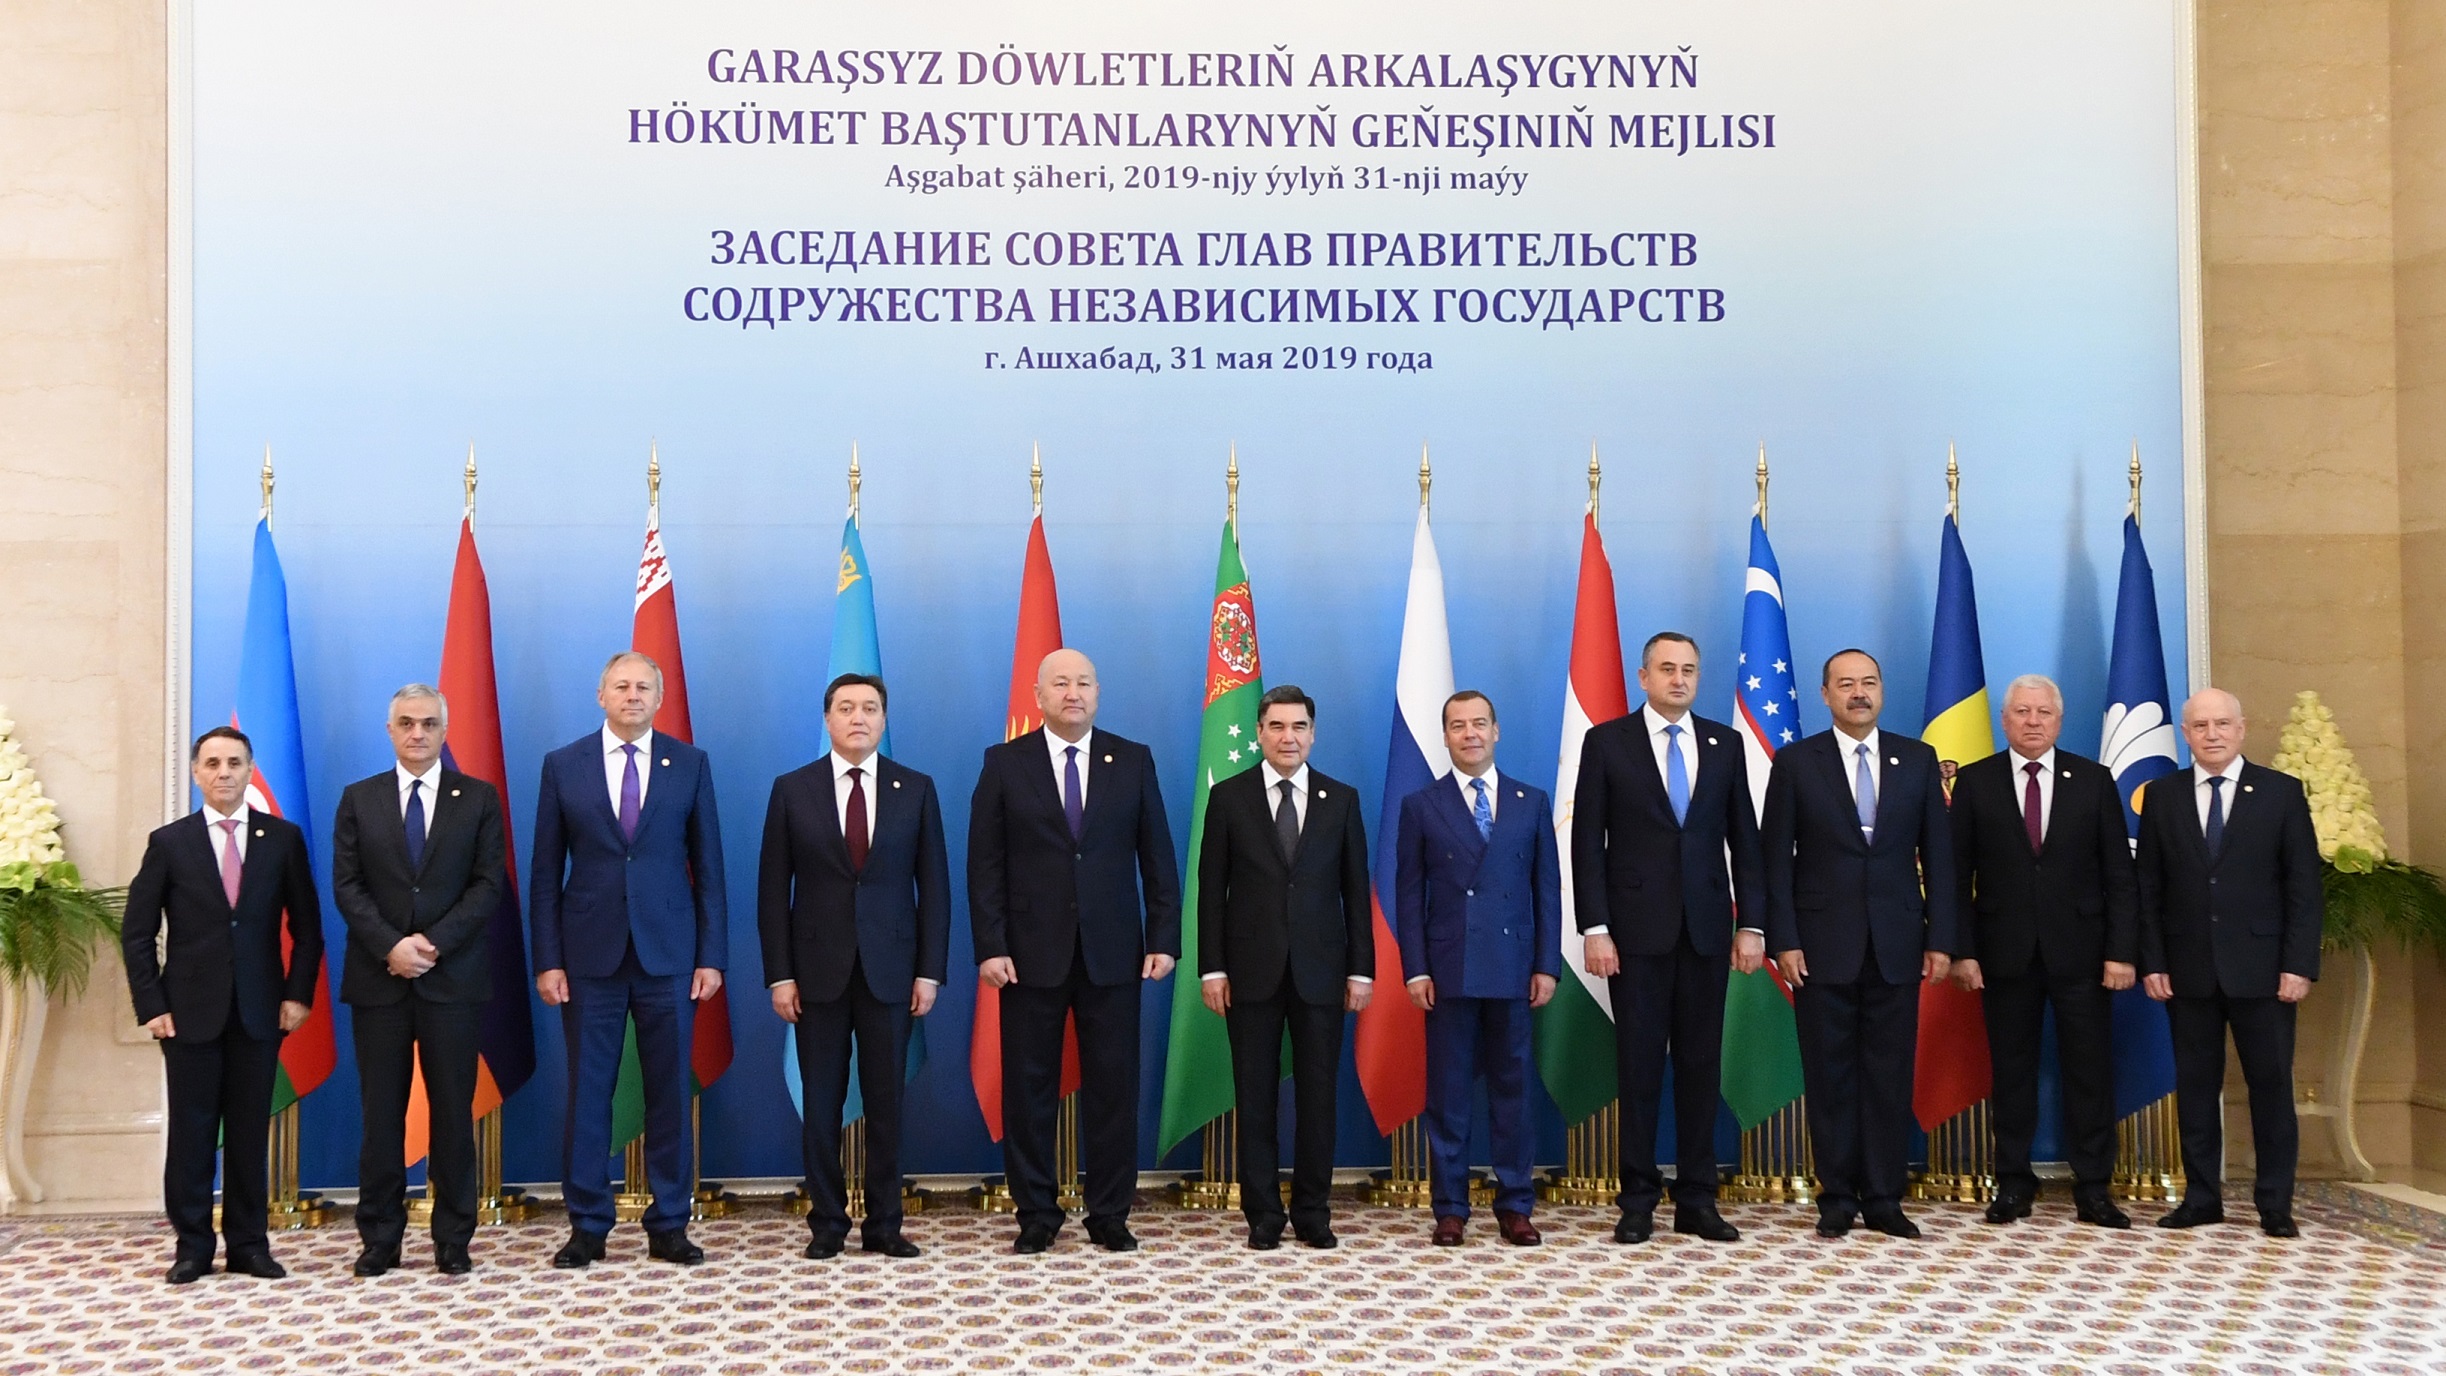 Askar Mamin met with President of Turkmenistan Gurbanguly Berdymukhamedov